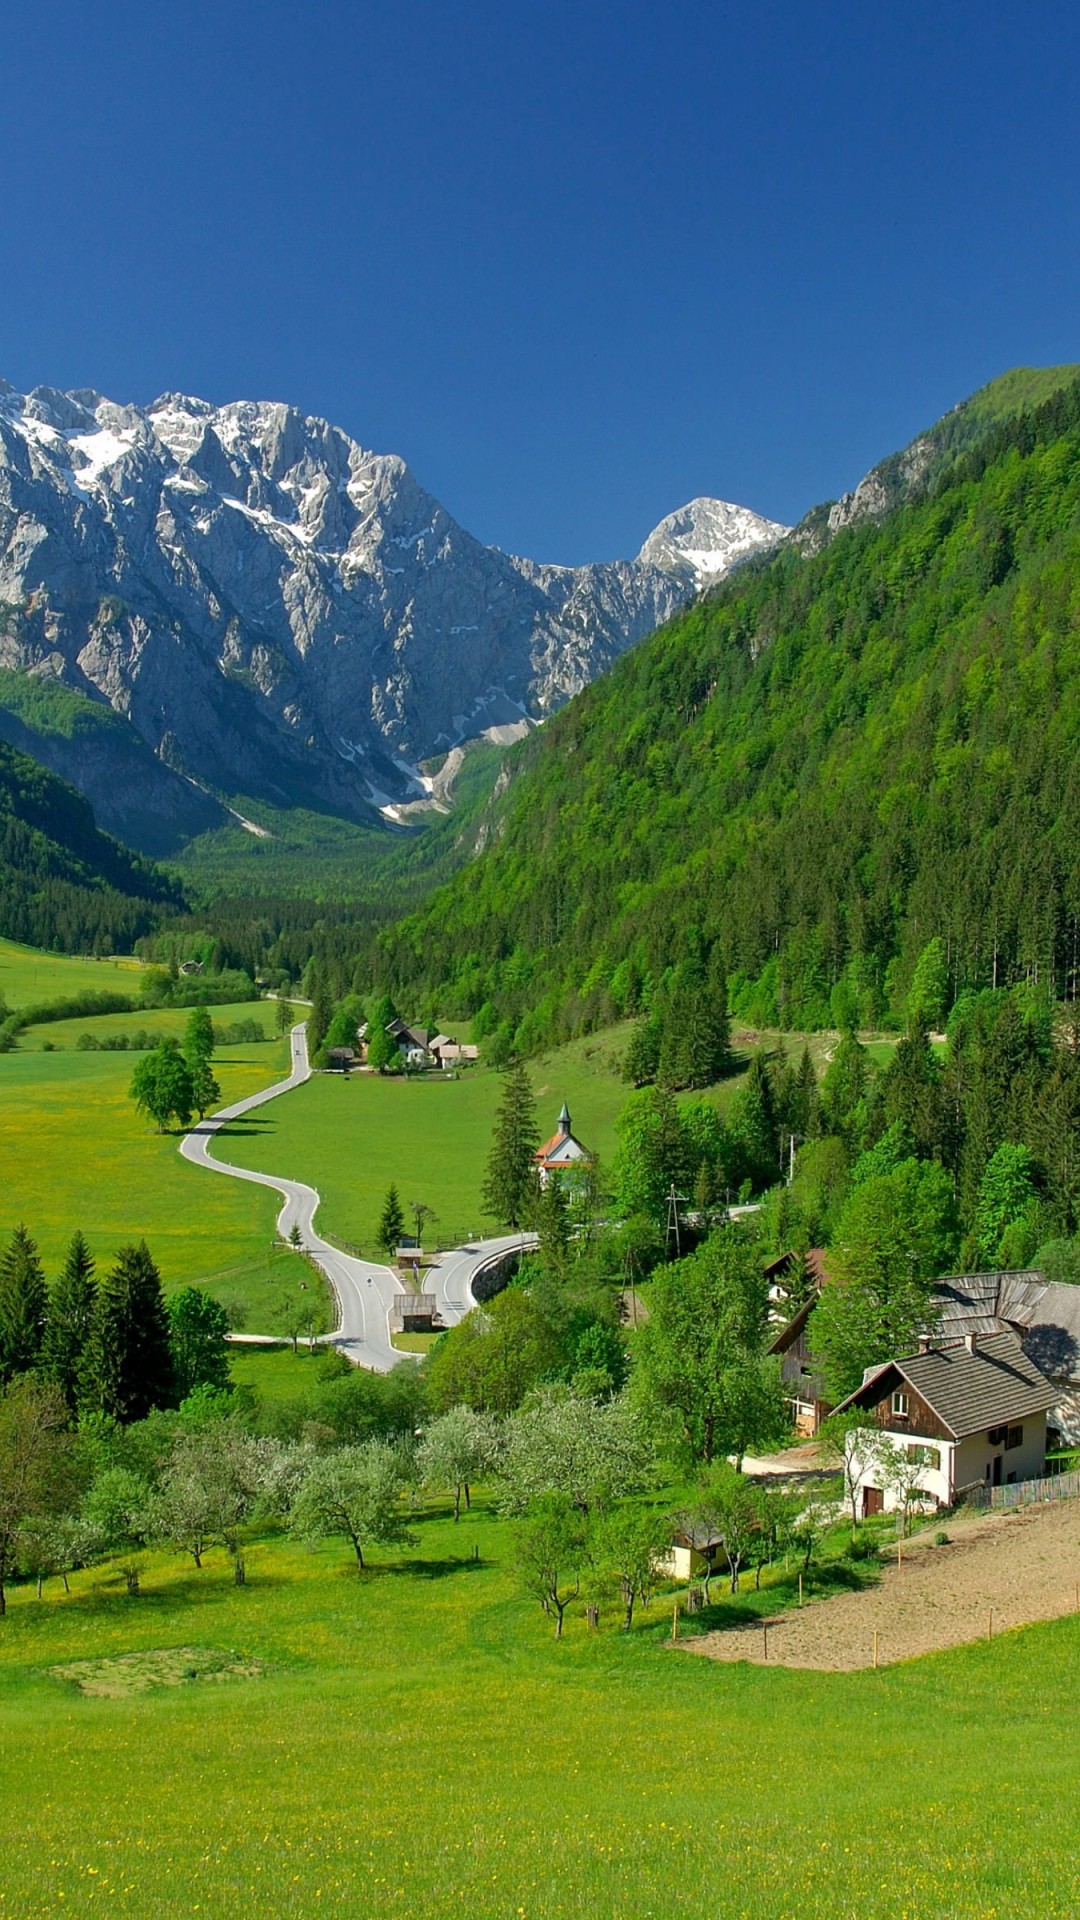 Spring In The Alpine Valley Wallpaper for Google Nexus 5